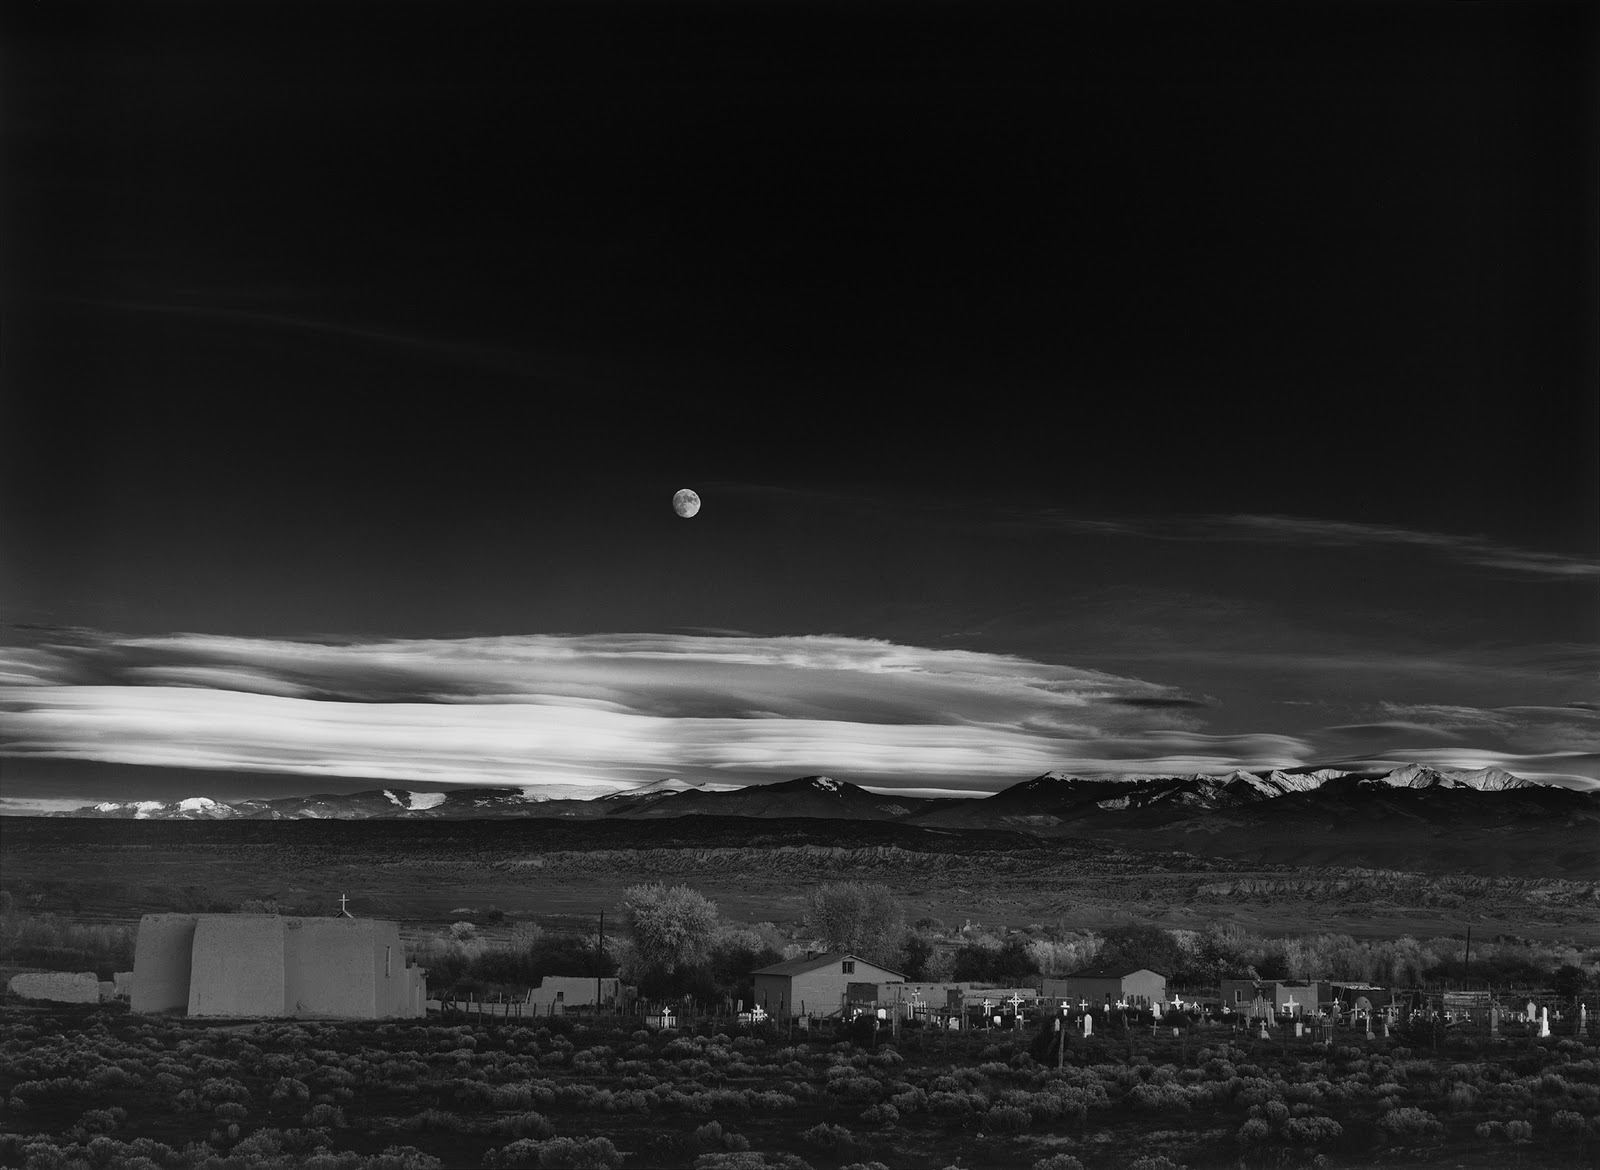 S-0762, Vgl. Ansel Adams, „Moonrise, Hernandez, New Mexico“ 1941.